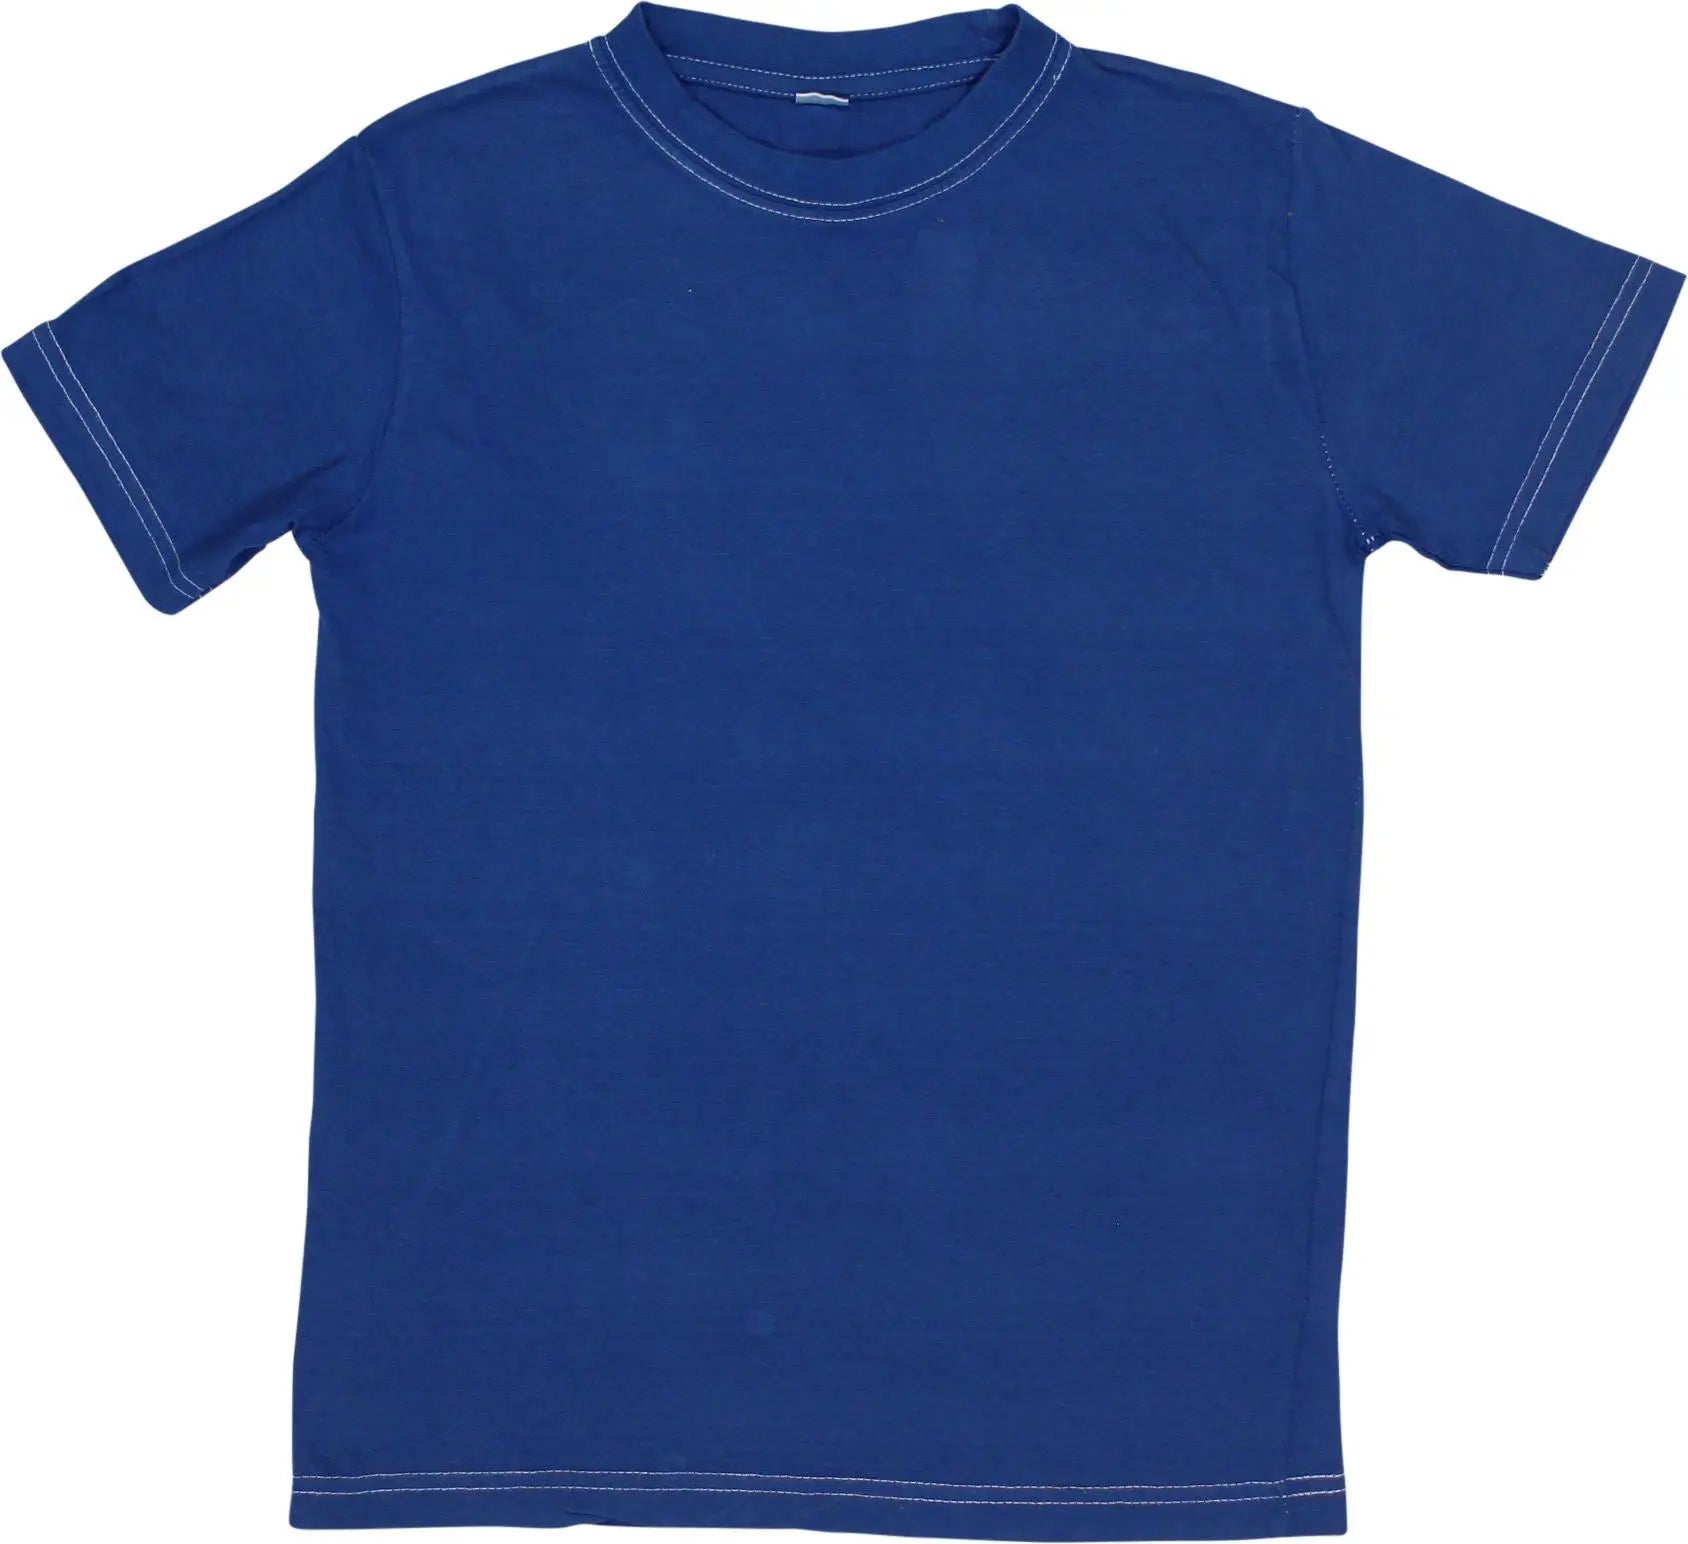 Zeeman - BLUE6137- ThriftTale.com - Vintage and second handclothing